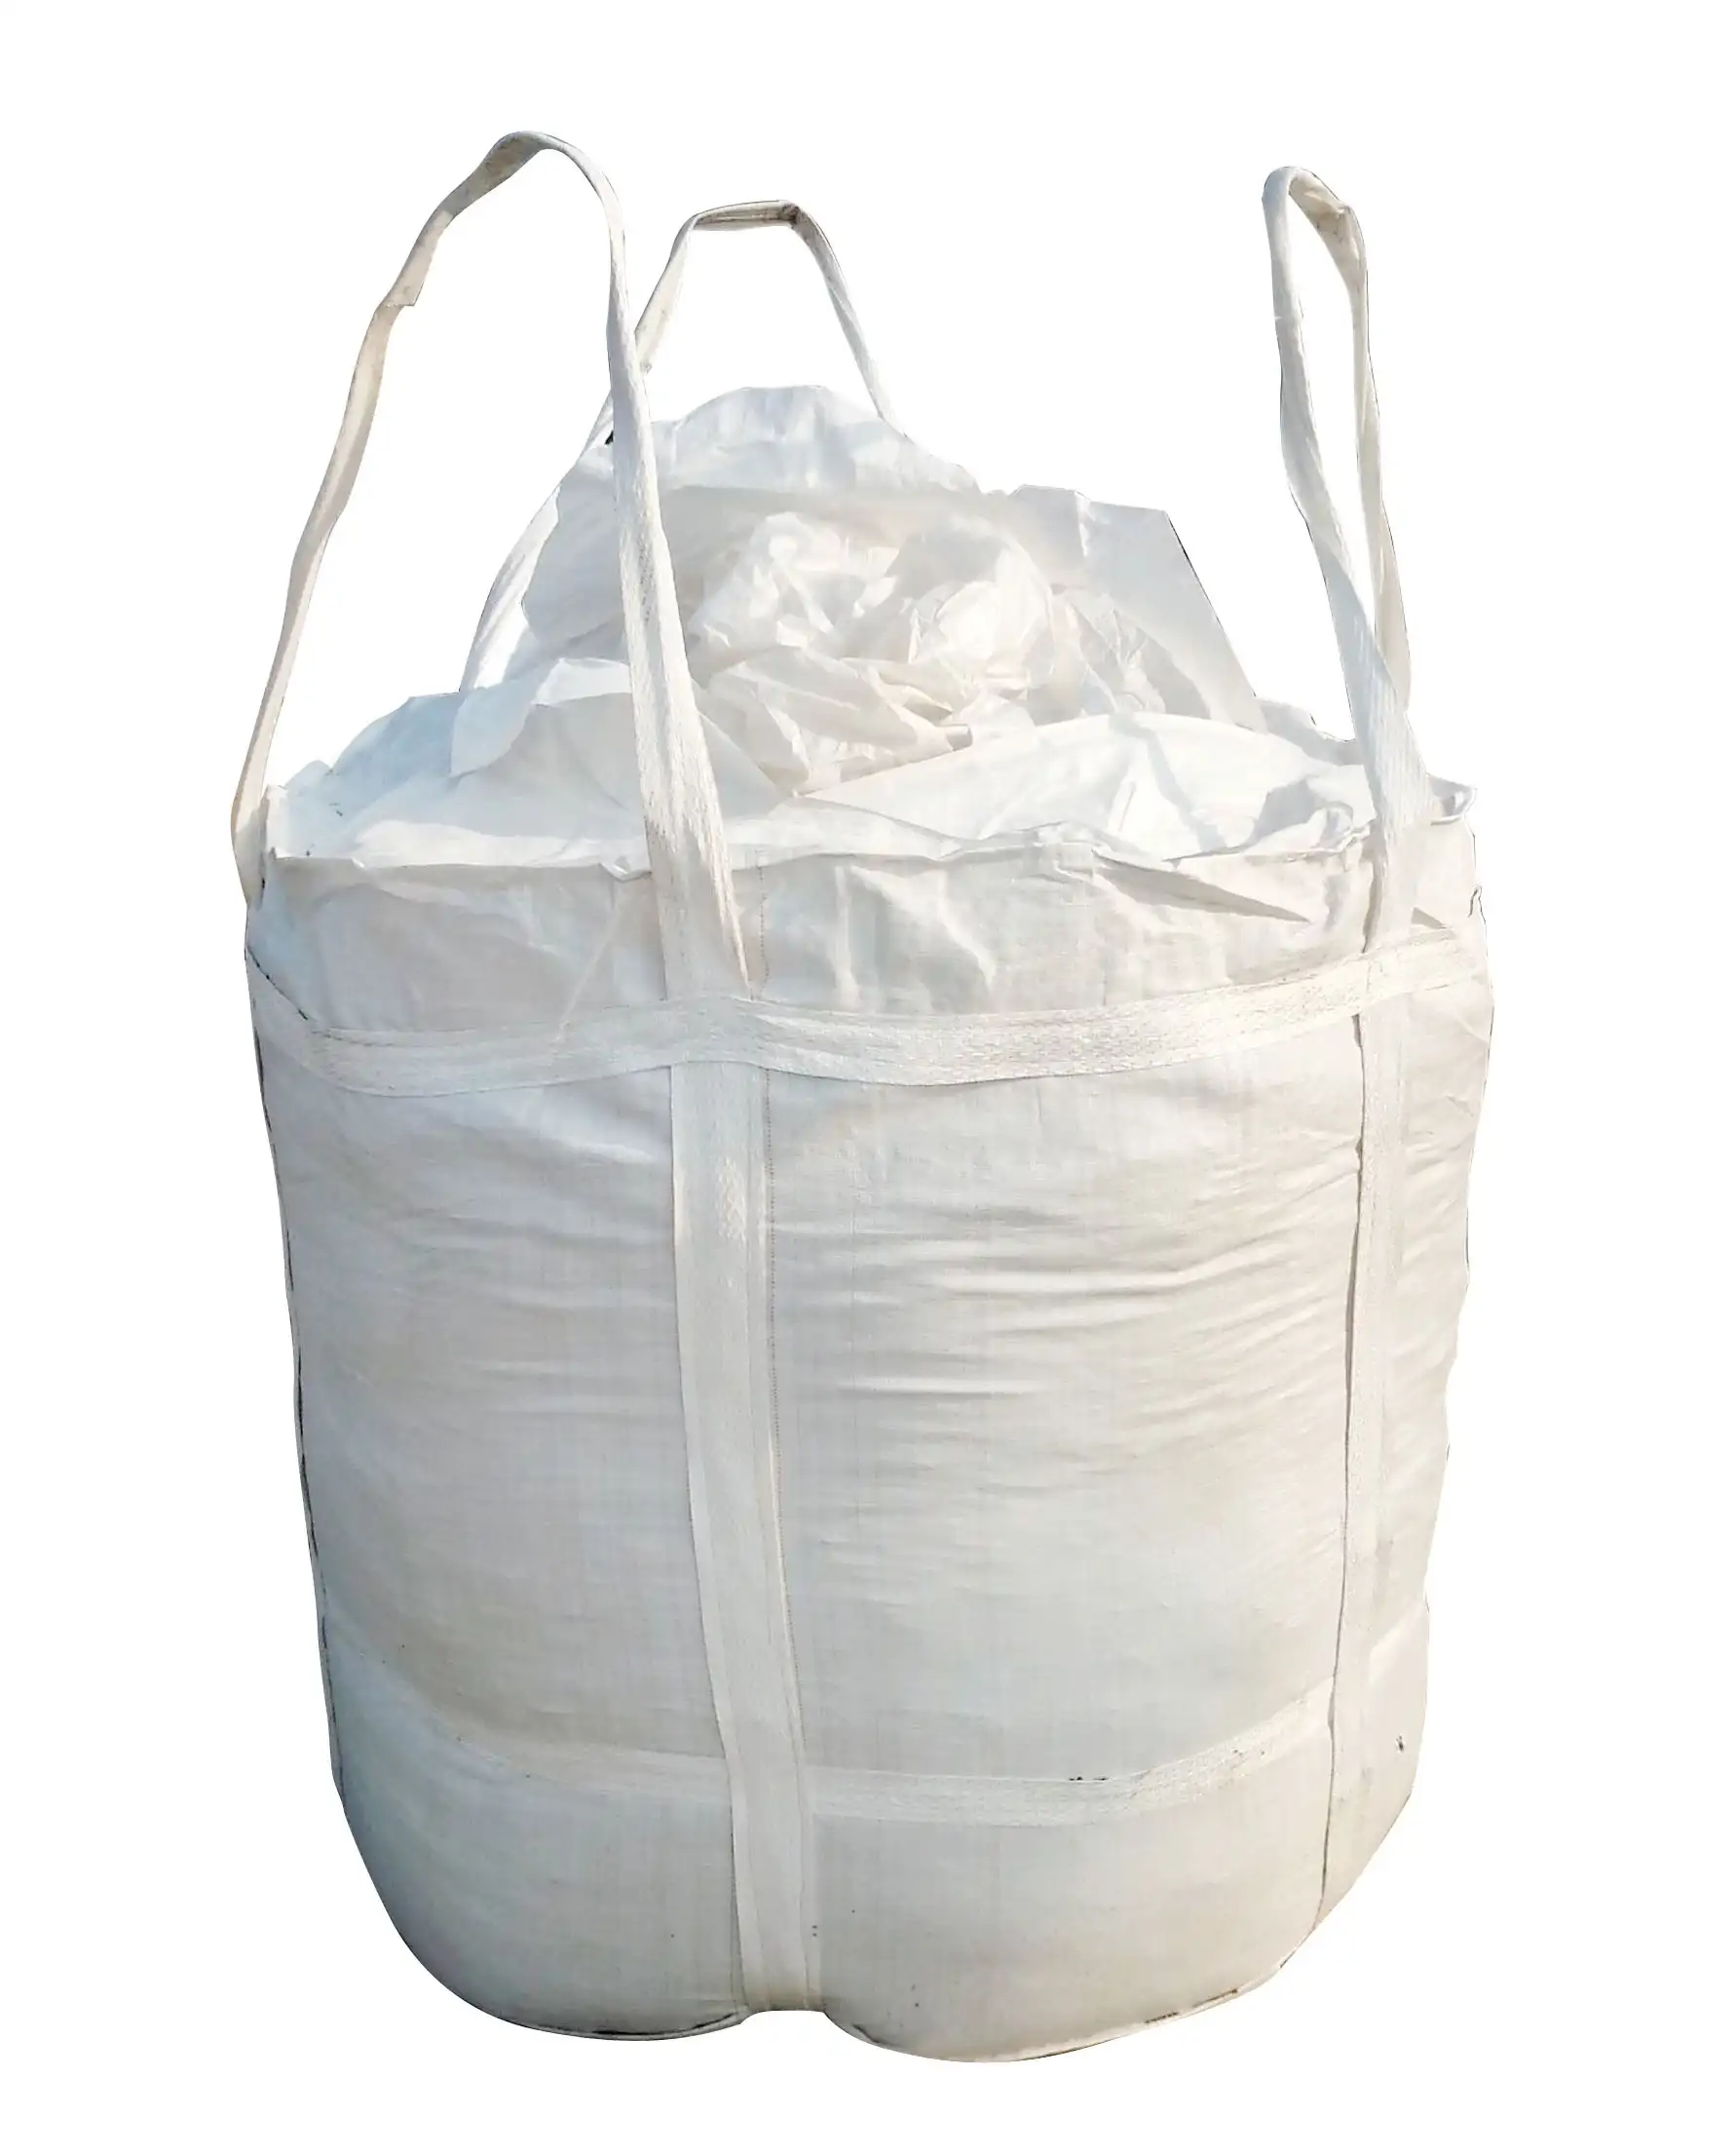 Hot sale 3 loops big bag jumbo bulk sacks for 3000kg ore or mineral UV treated safety factor 5:1 UN certification